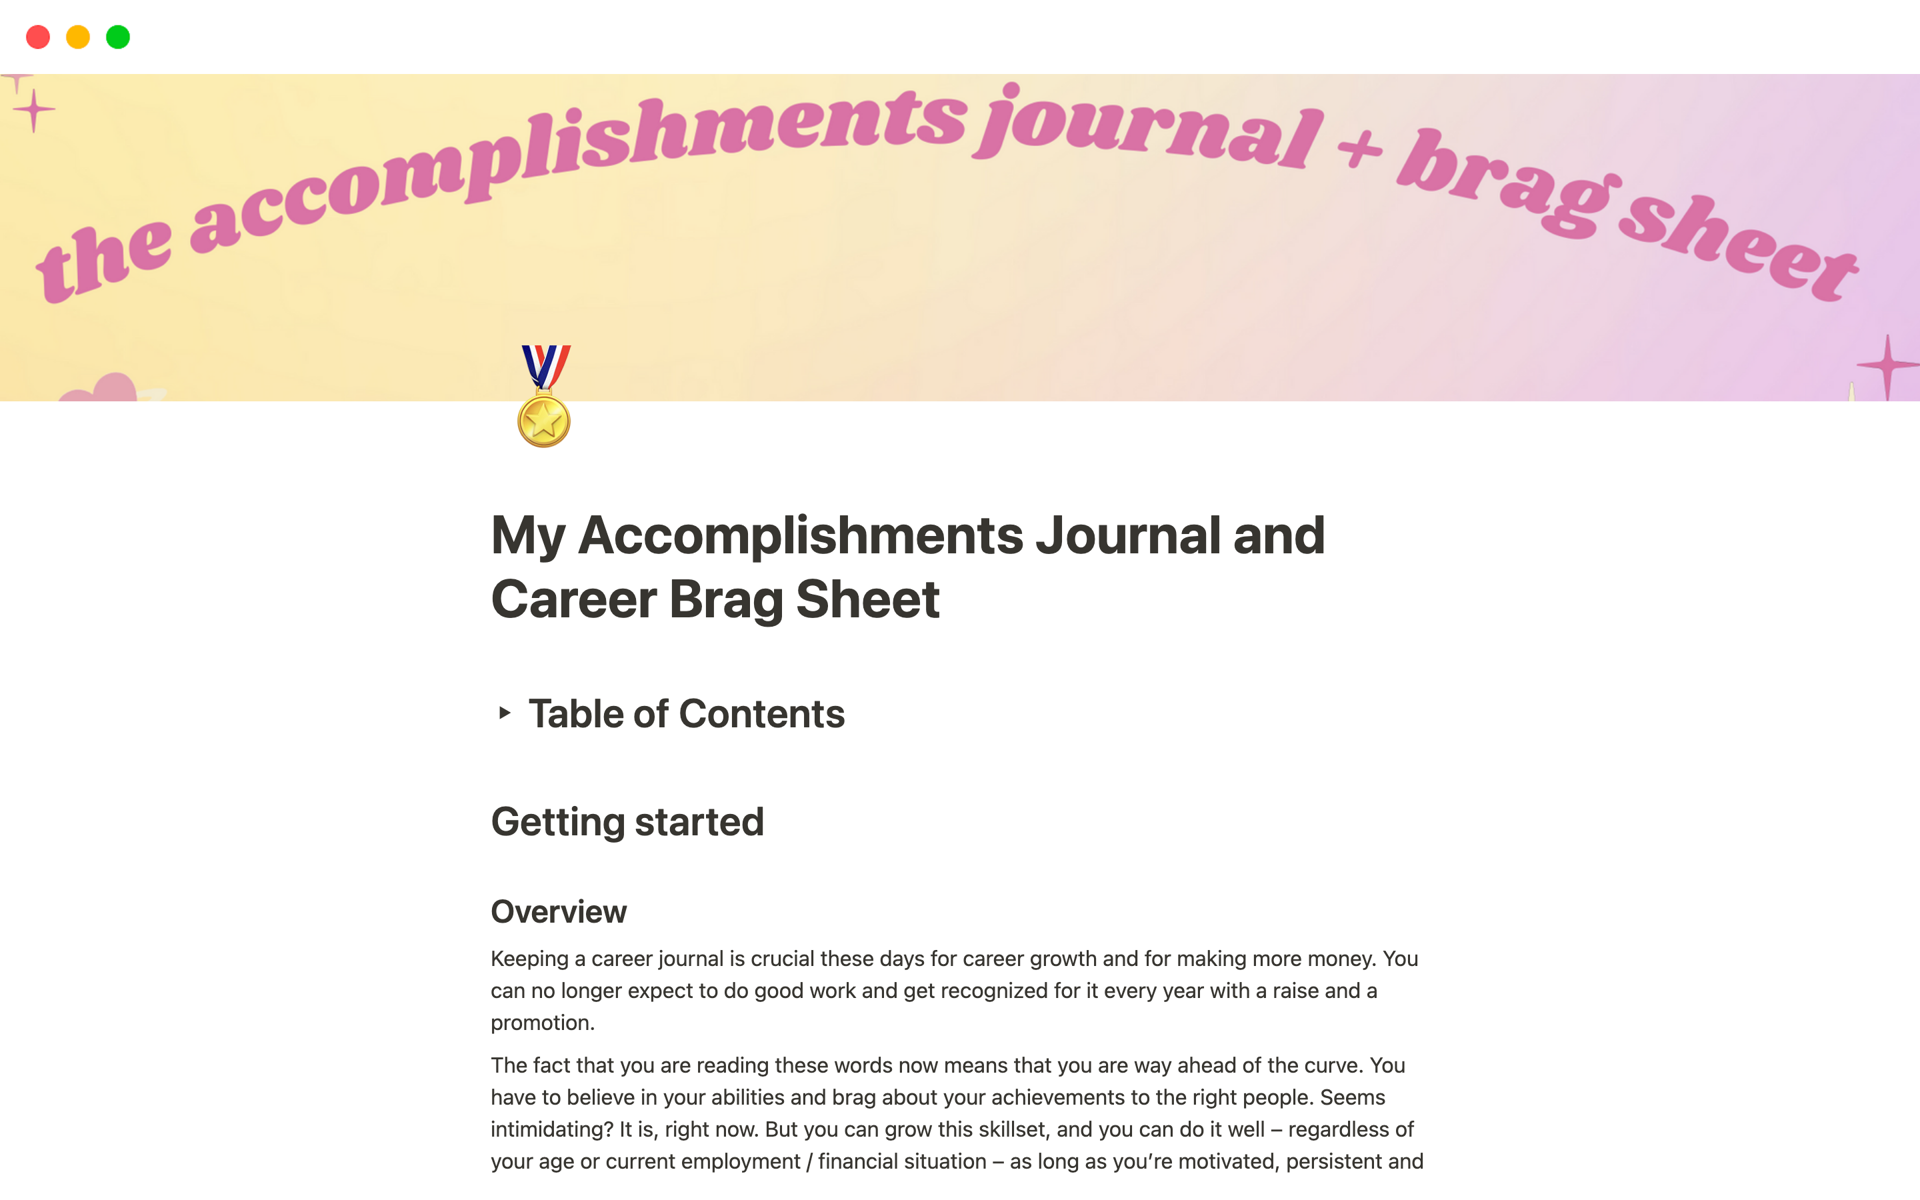 My Accomplishments Journal and Career Brag Sheet님의 템플릿 미리보기